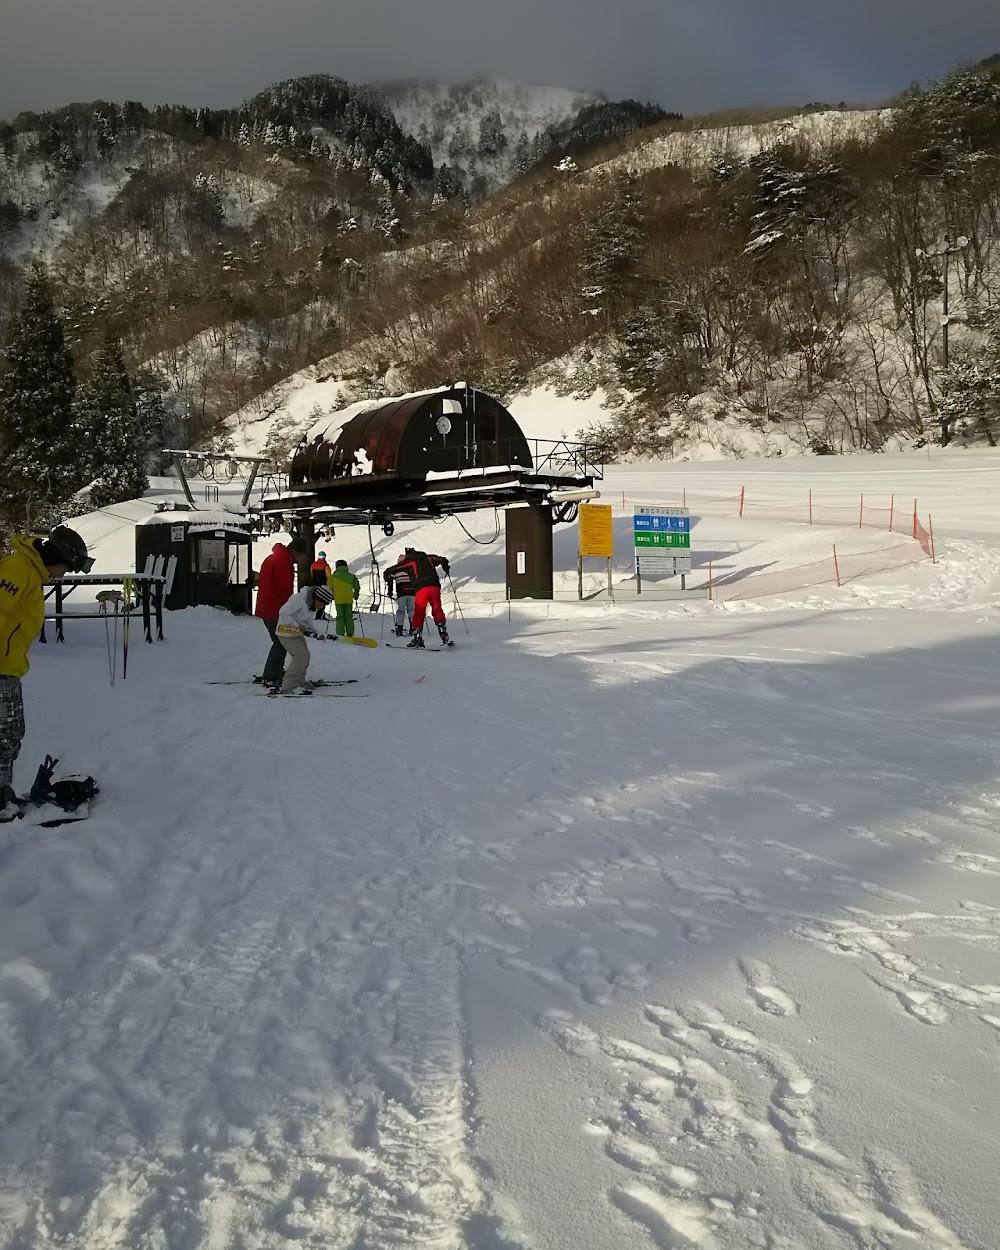 Kunizakai Kogen Snow Park